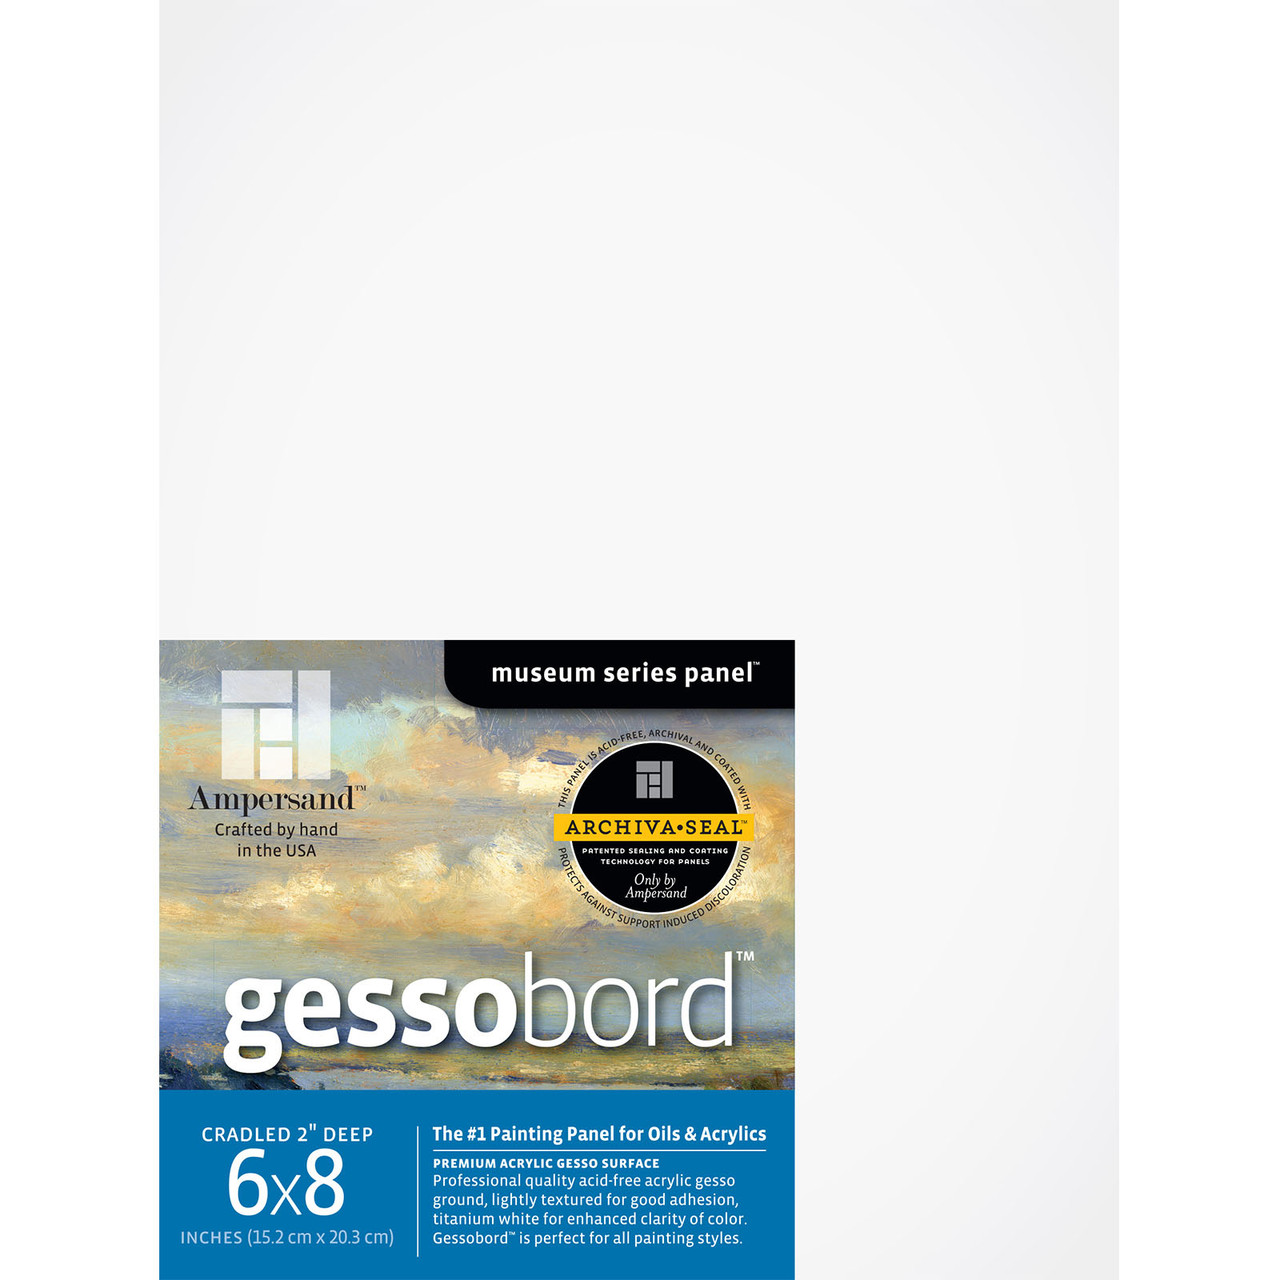 Ampersand Gessobord - 6 x 12, 2 Cradled 